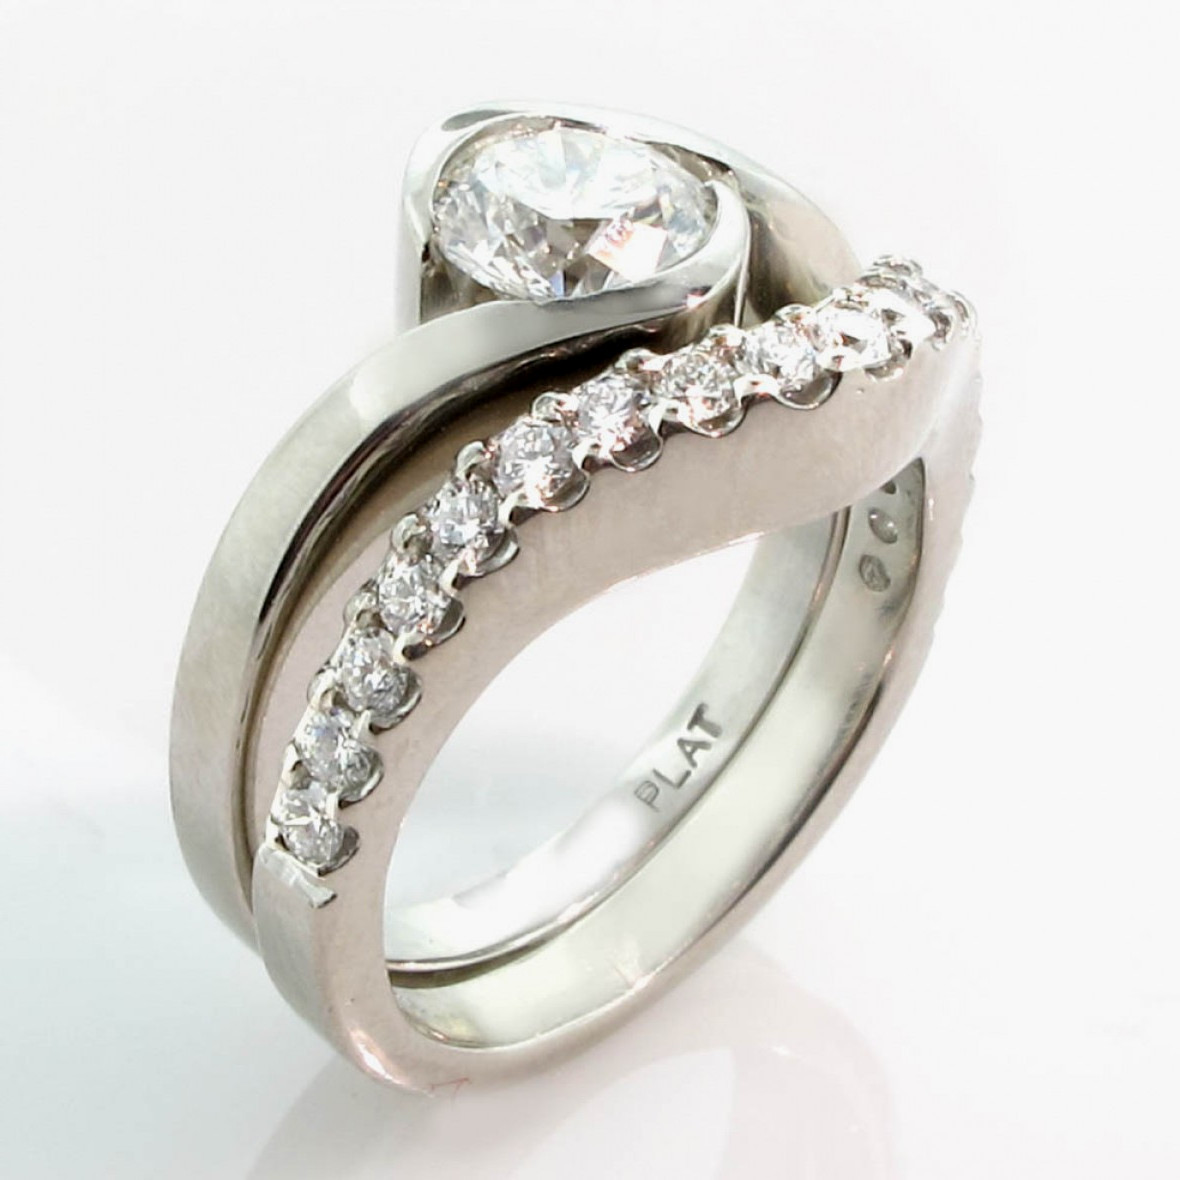 Camo Diamond Wedding Rings
 New Pink Camo Diamond Wedding Rings for Her Matvuk